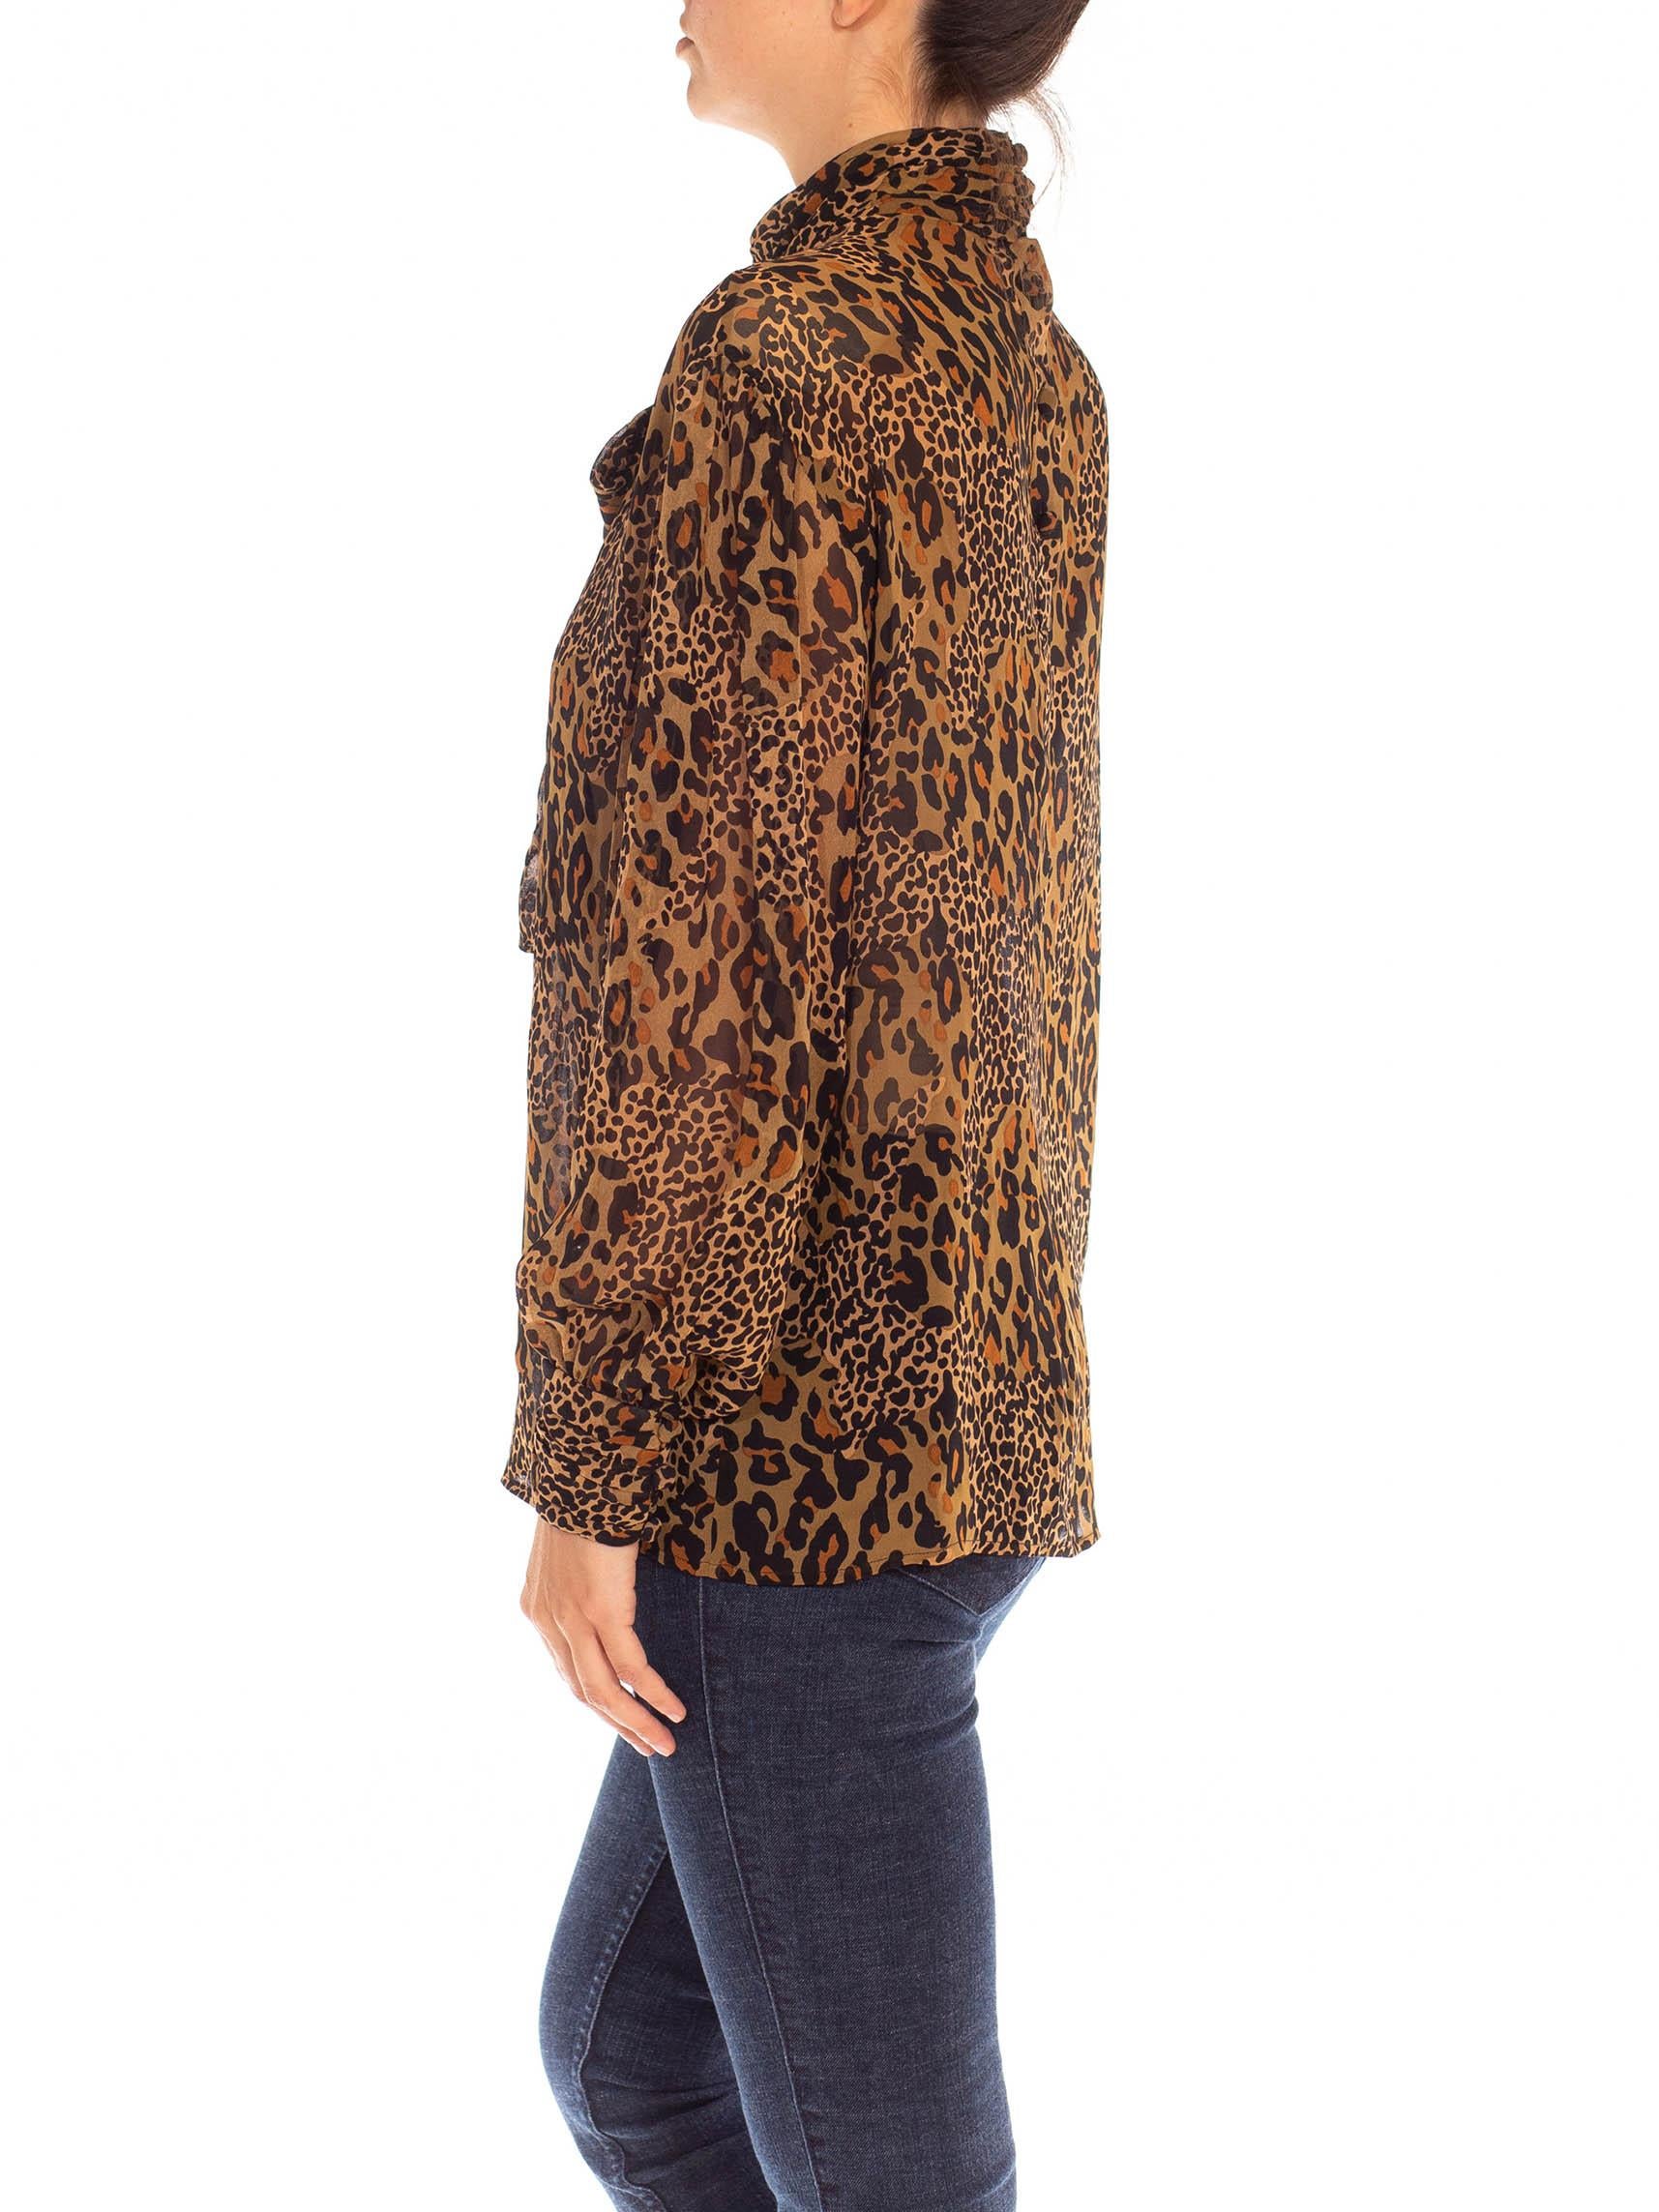 chiffon leopard print blouse